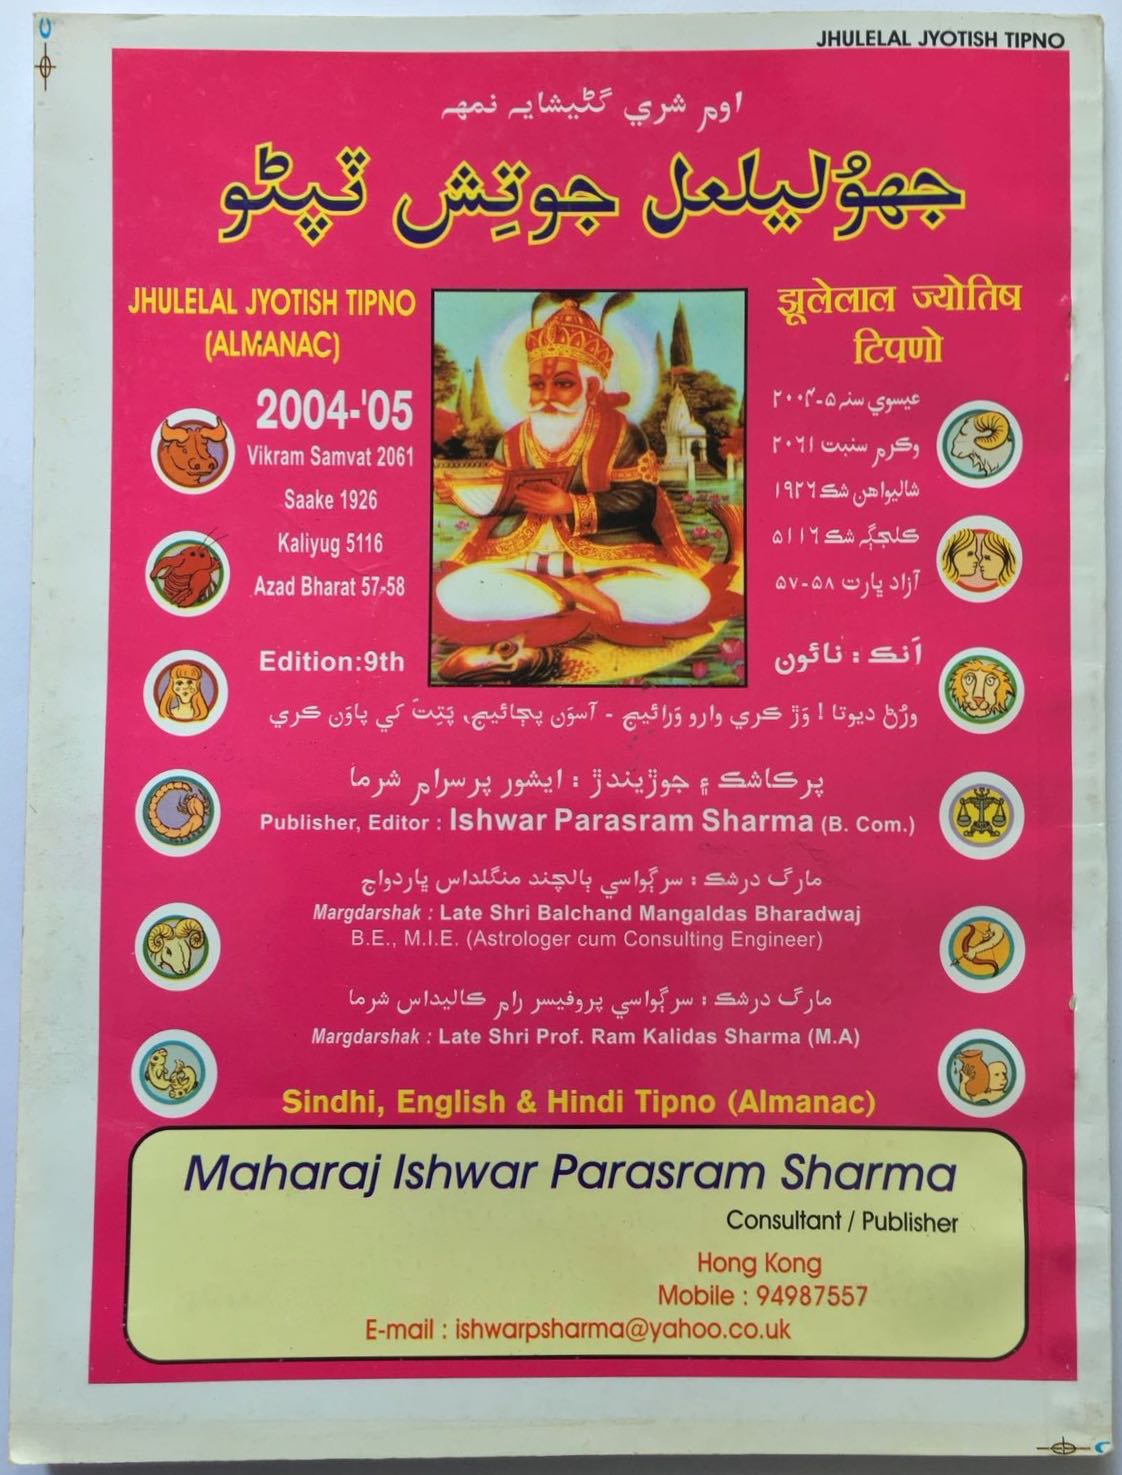 Jhulelal Jyotish Tipno (Almanac) Year 2004-'05 compiled by Ishwar Parsram Sharma in Hindi, Sindhi, Sanskrit and English - Top cover page Sindhi side